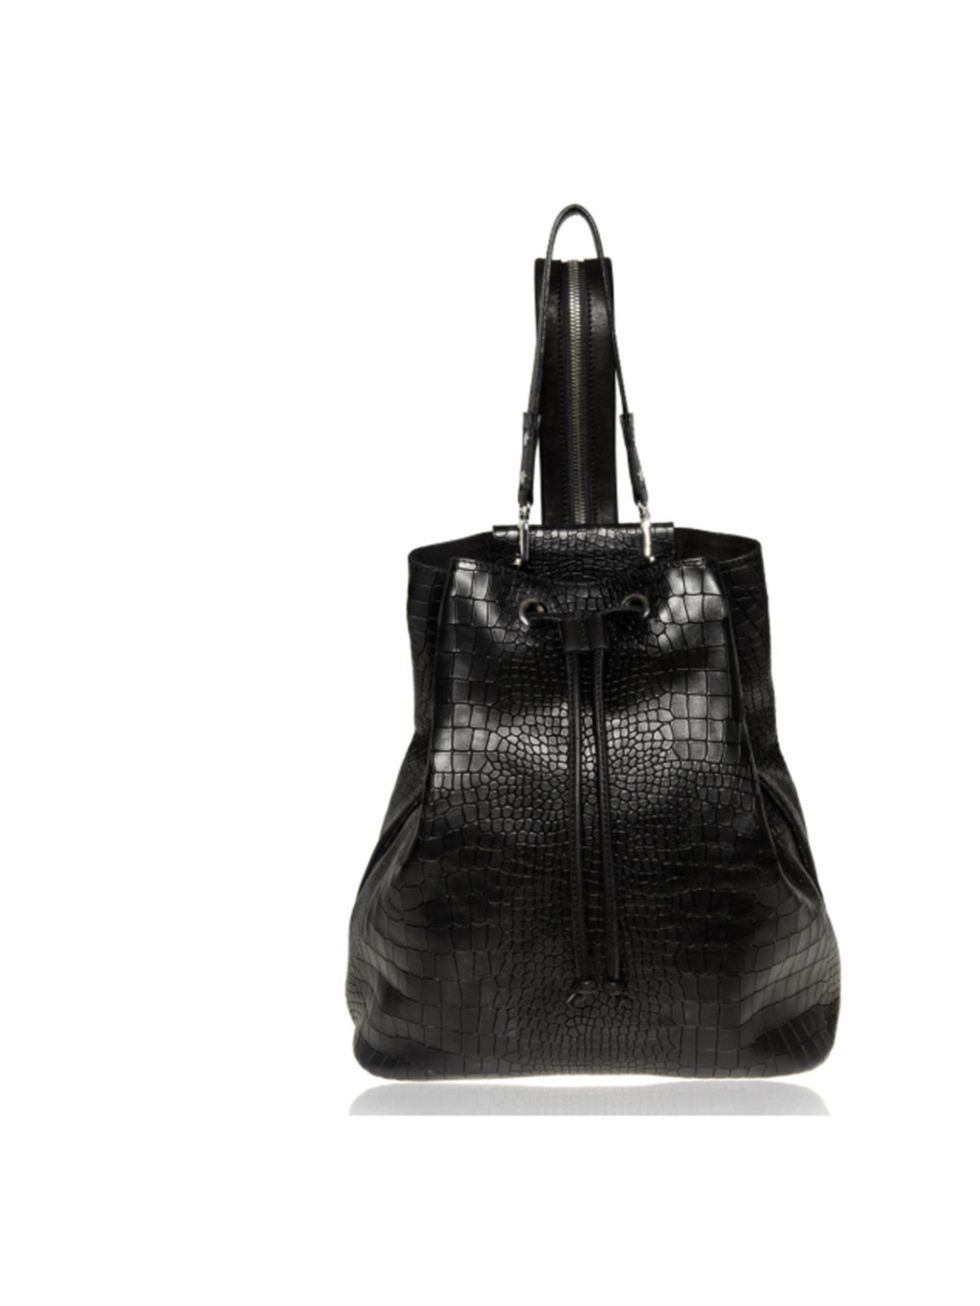 <p>Kurt Geiger Black leather rucksack, £180 at <a href="http://www.kurtgeiger.com/dash-rucksack-black-leather-kurt-geiger-london-accessory.html">Kurtgeiger.com</a></p>